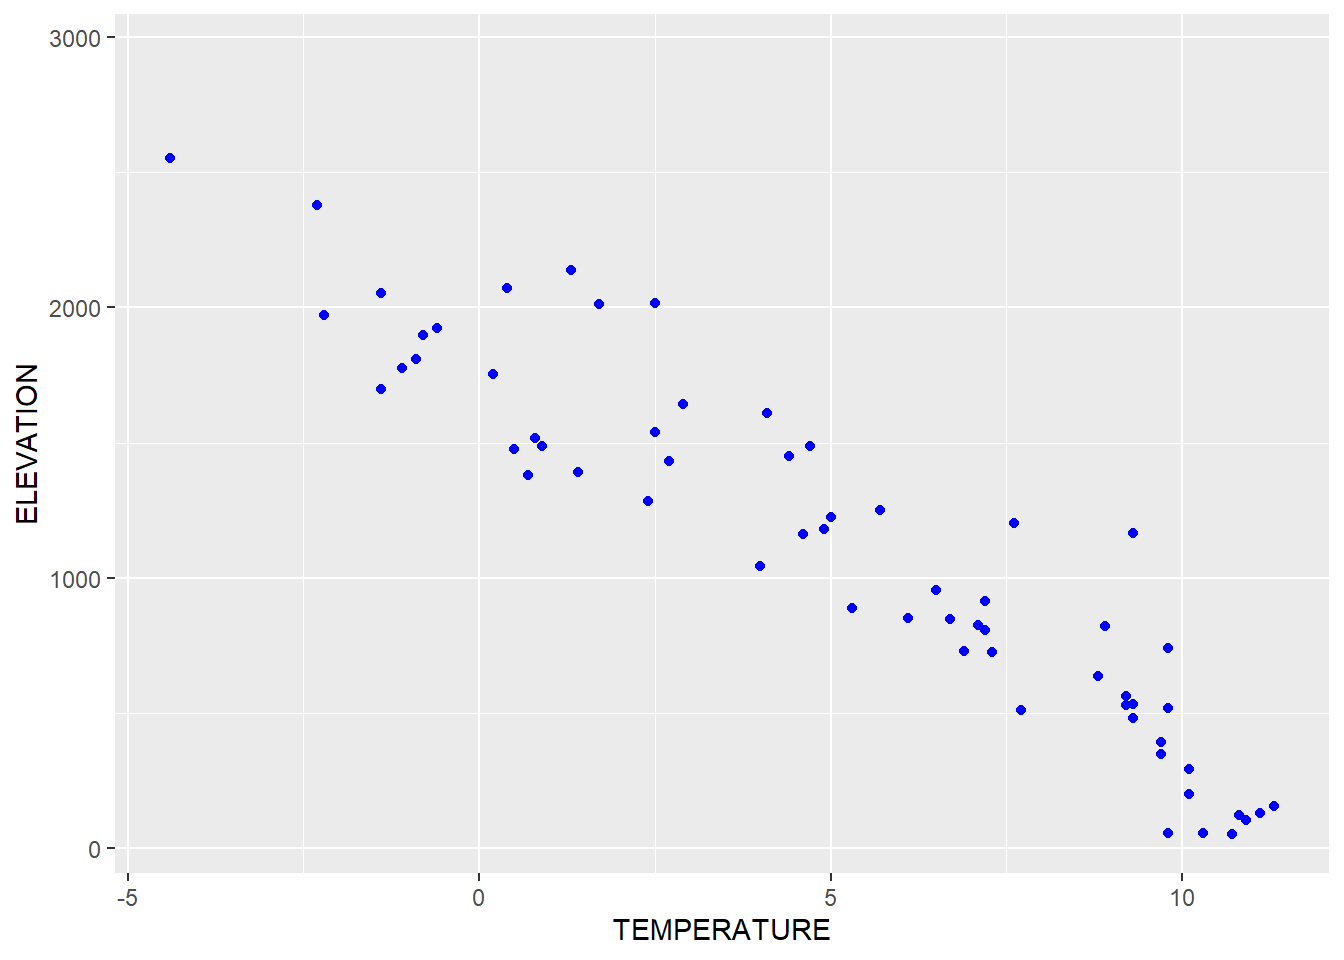 Visualizing soil CO~2~ data with a Tukey box plot